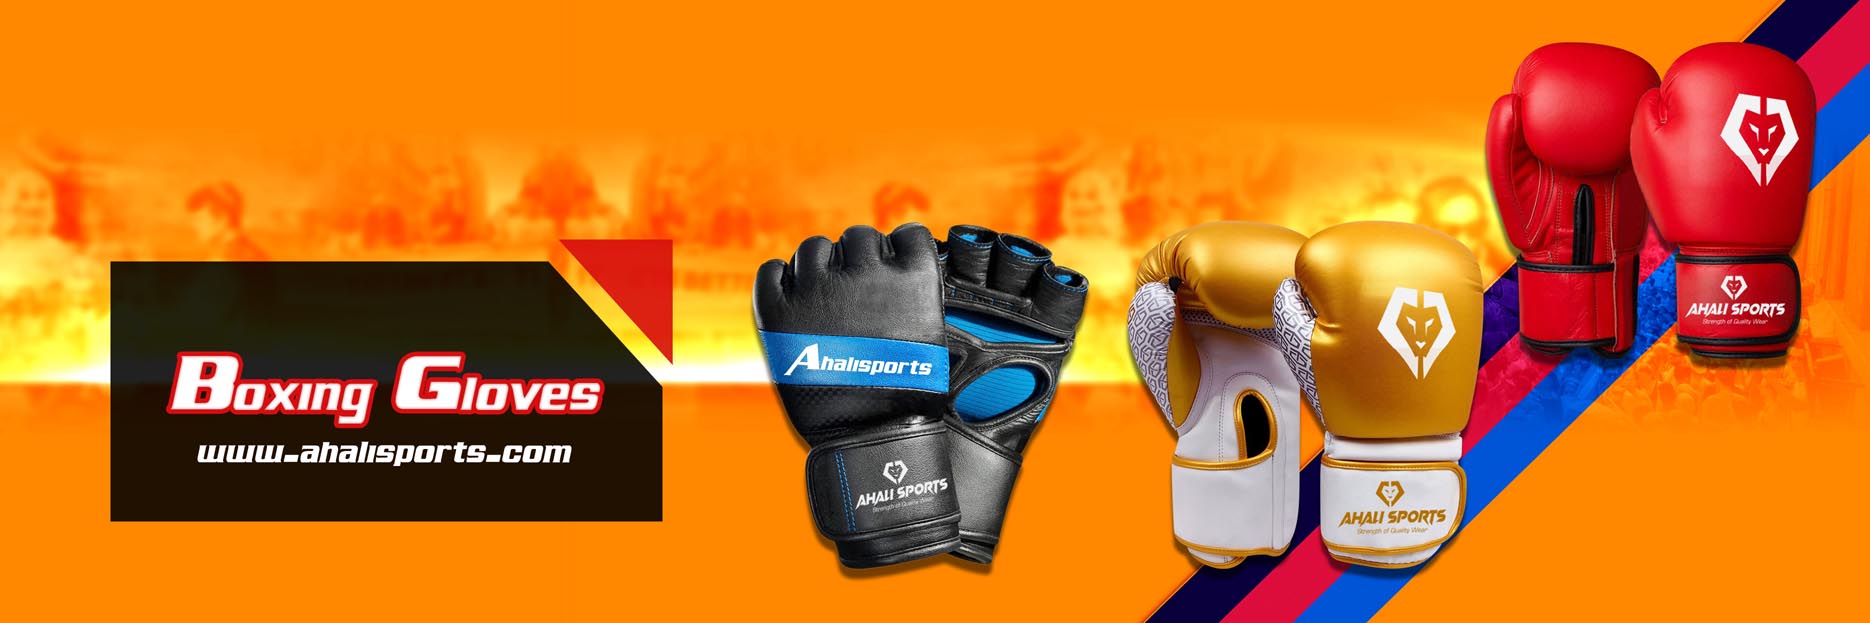 https://ahalisports.com/source/banner/main/boxing-gloves.jpg